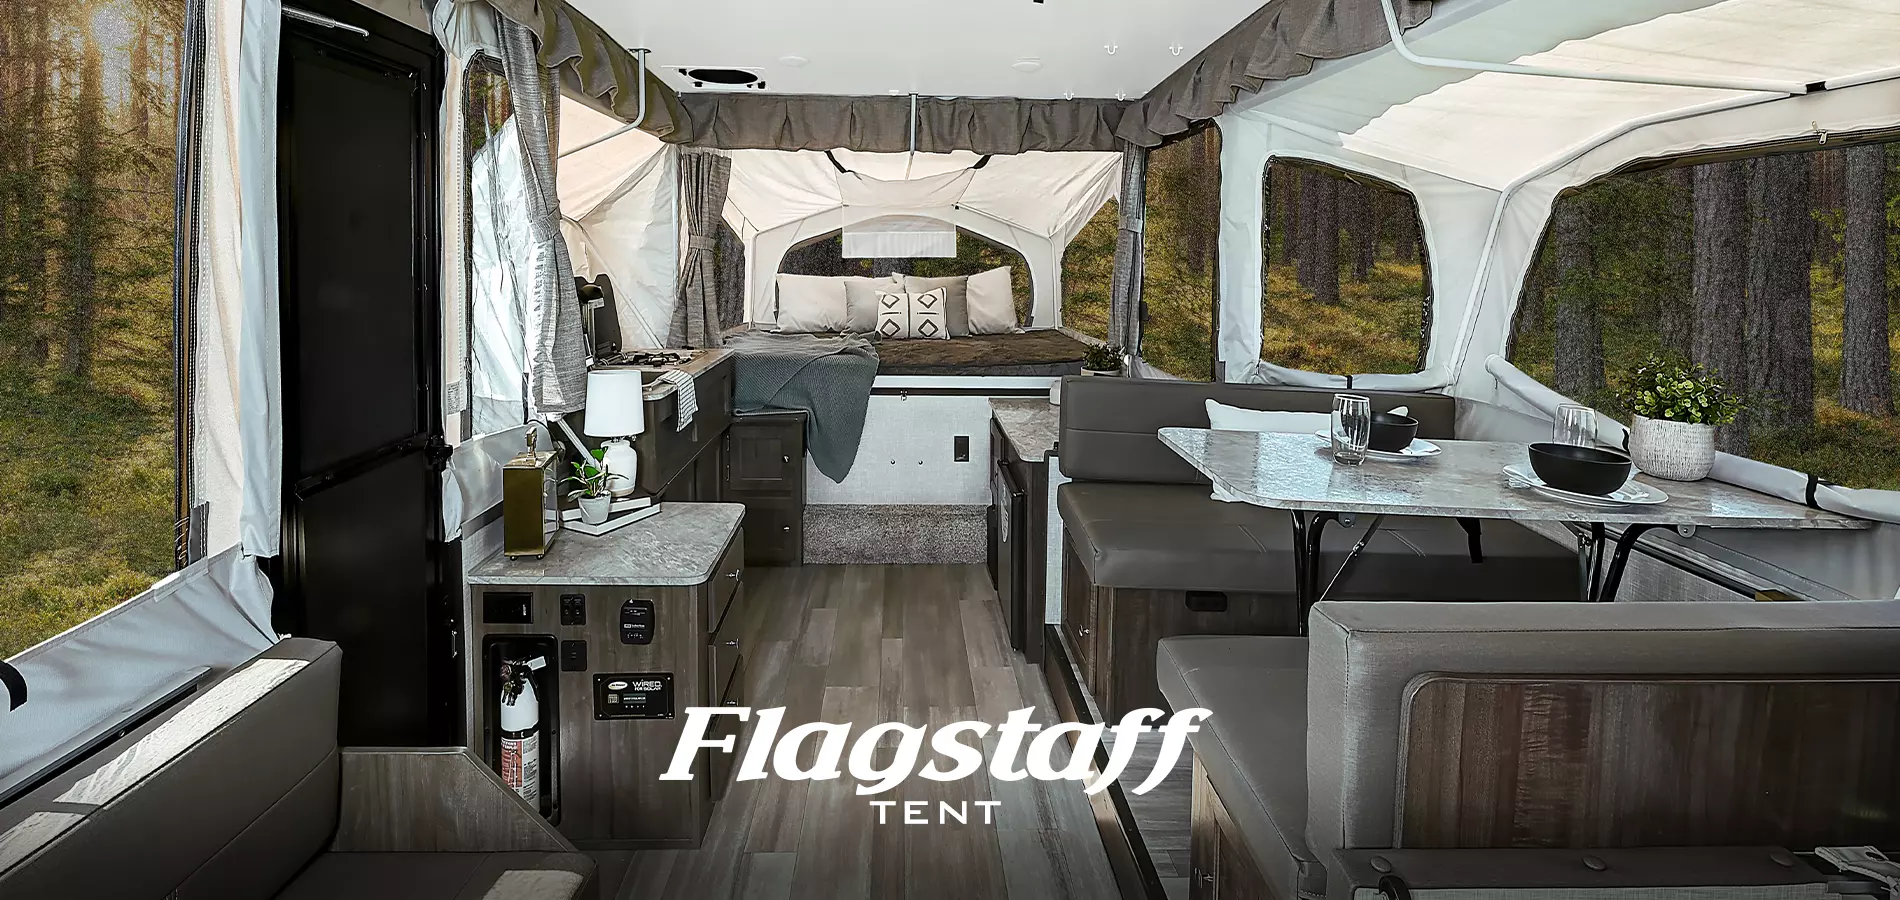 Flagstaff Tent RVs